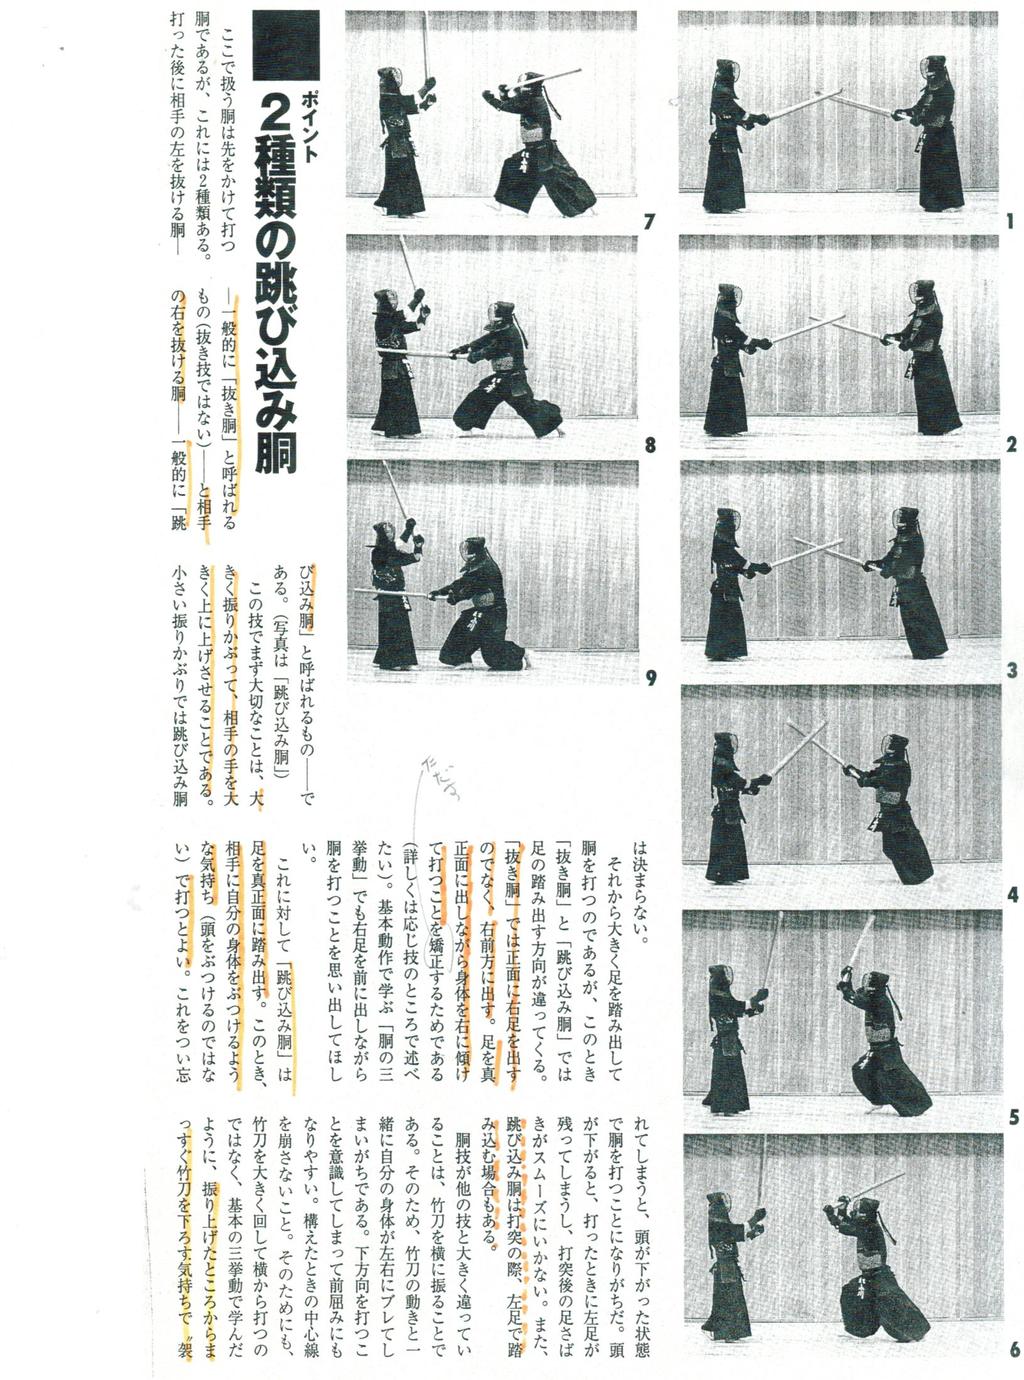 KENDO CLASSROOM ( 剣道教室 ) for Wining Kendo Waza Dō Page 1 of 7 Dō Strike Shikake Waza - Tip 1 The illustrated Waza 1-9 is called Tobikomi-Dō ( 飛び込み胴 ).